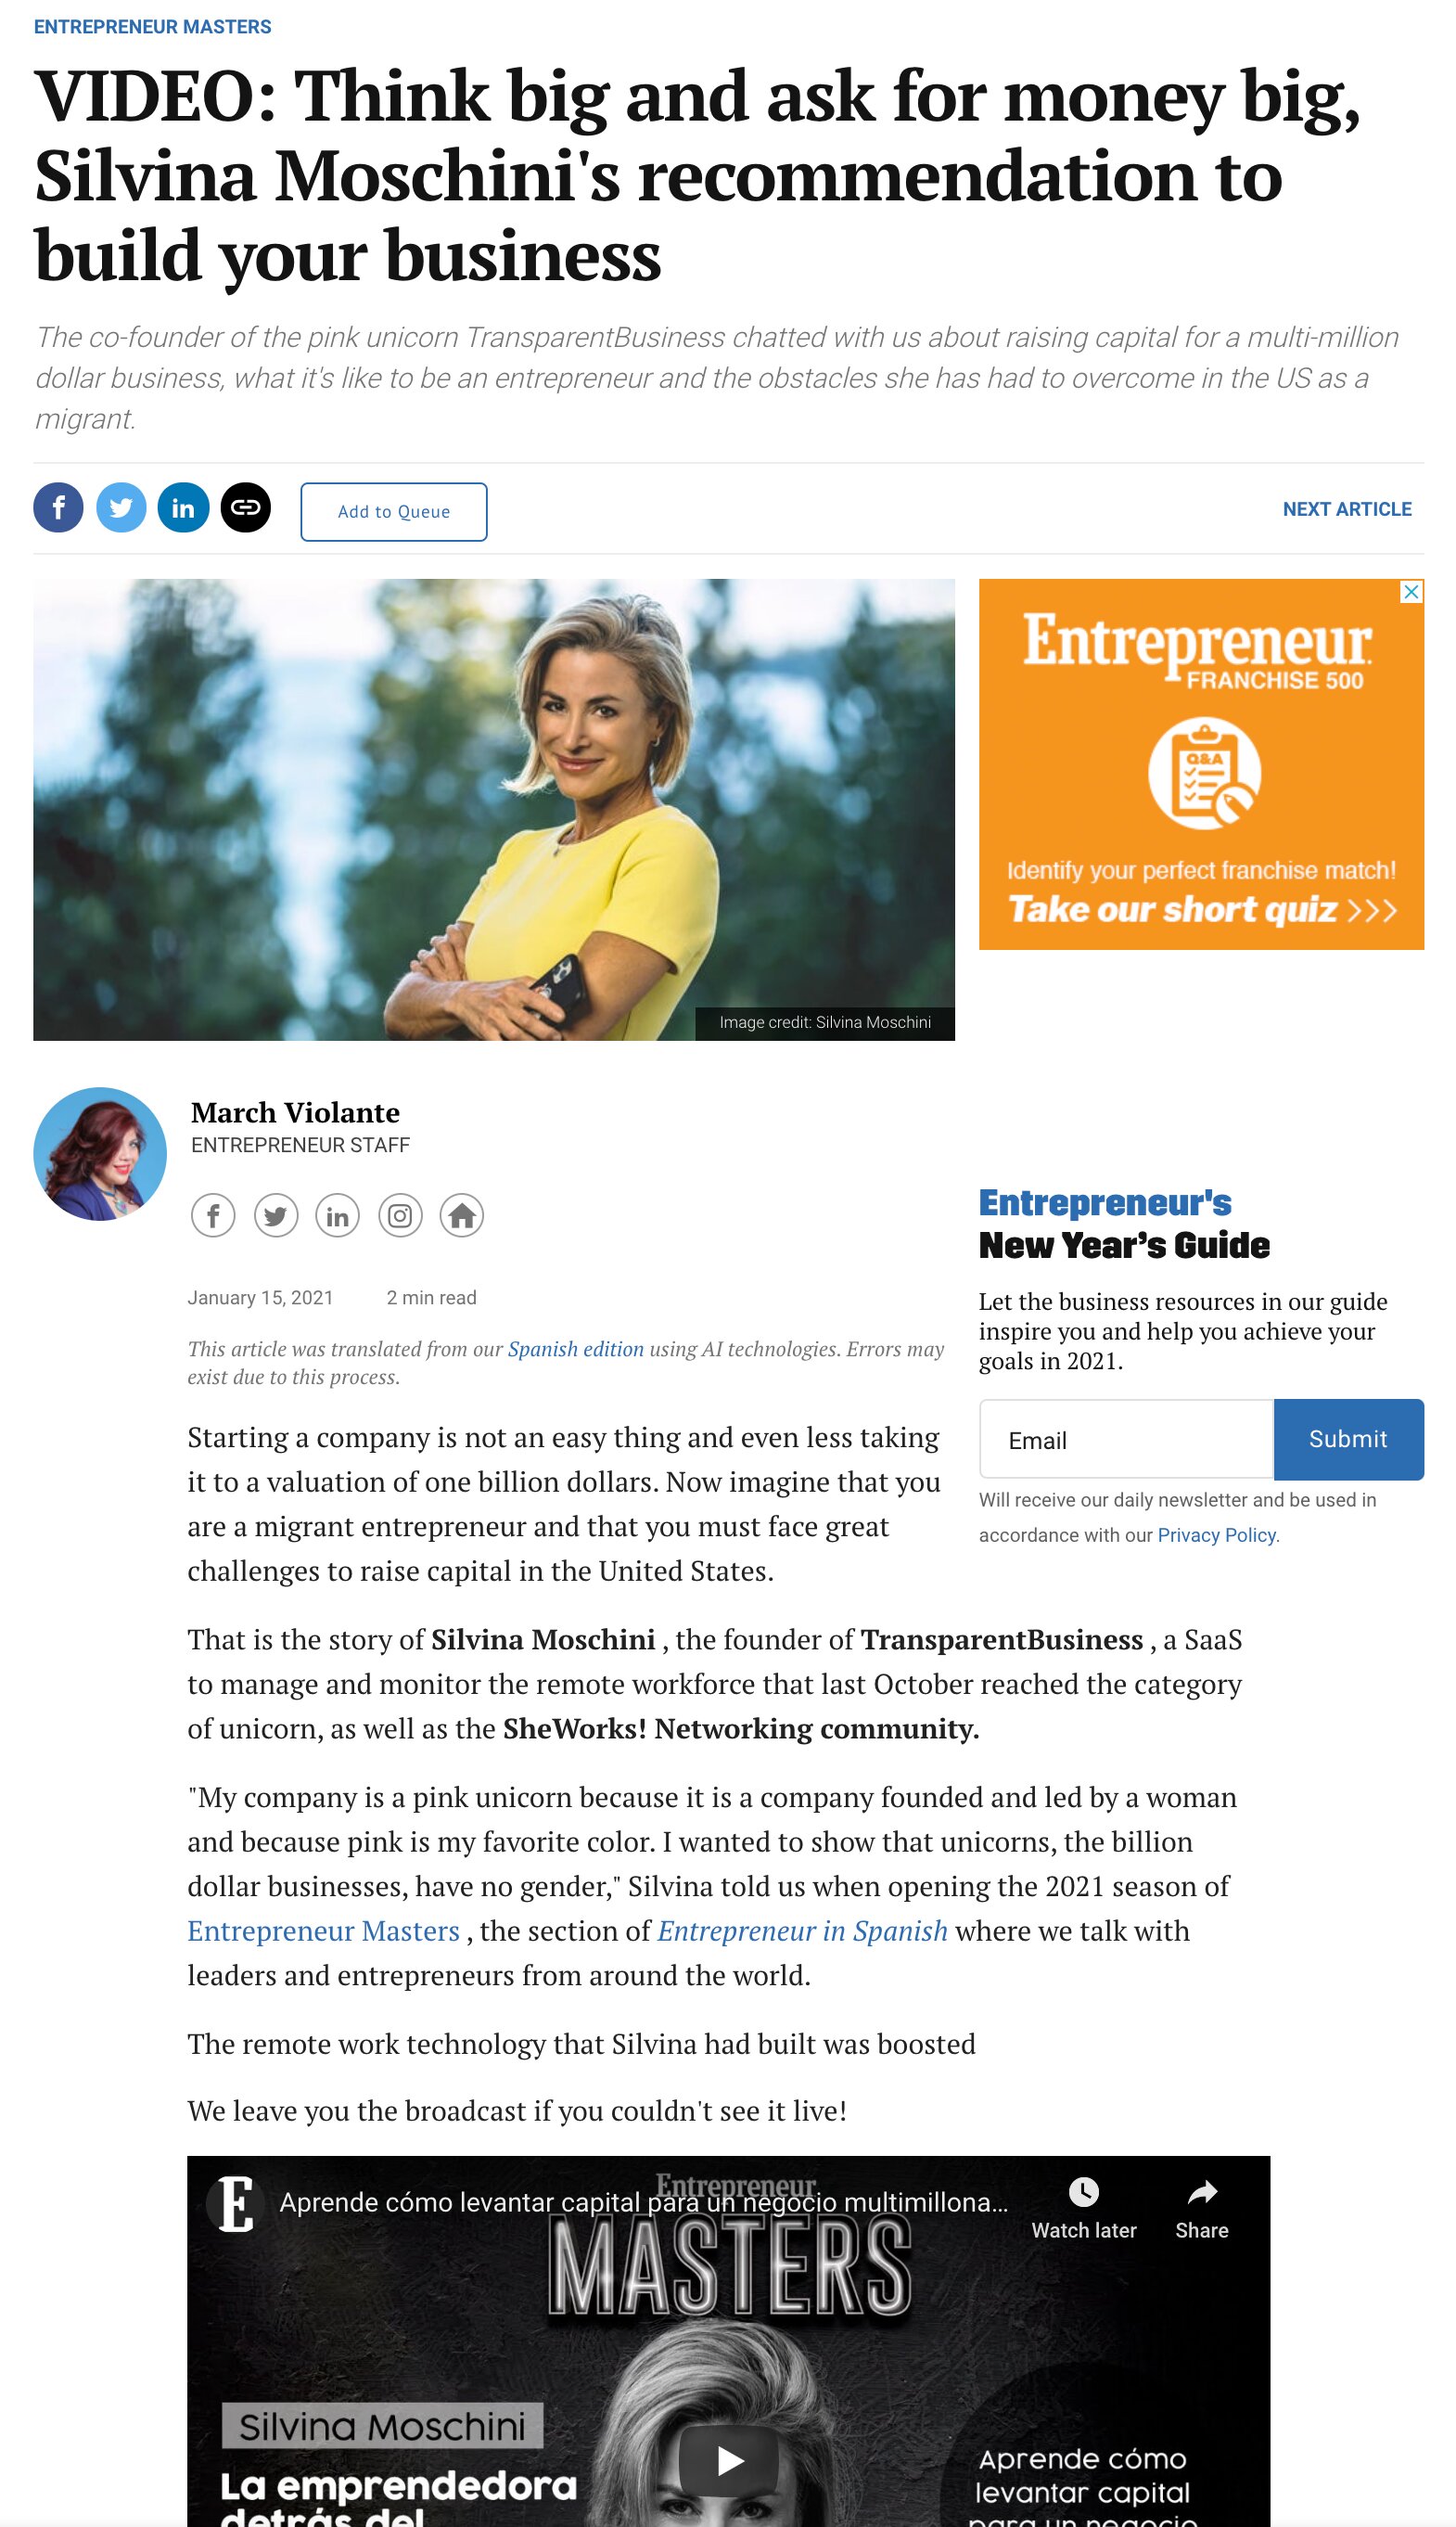 Silvina’s MASTERS profile appeared in Entrepreneur magazine in English